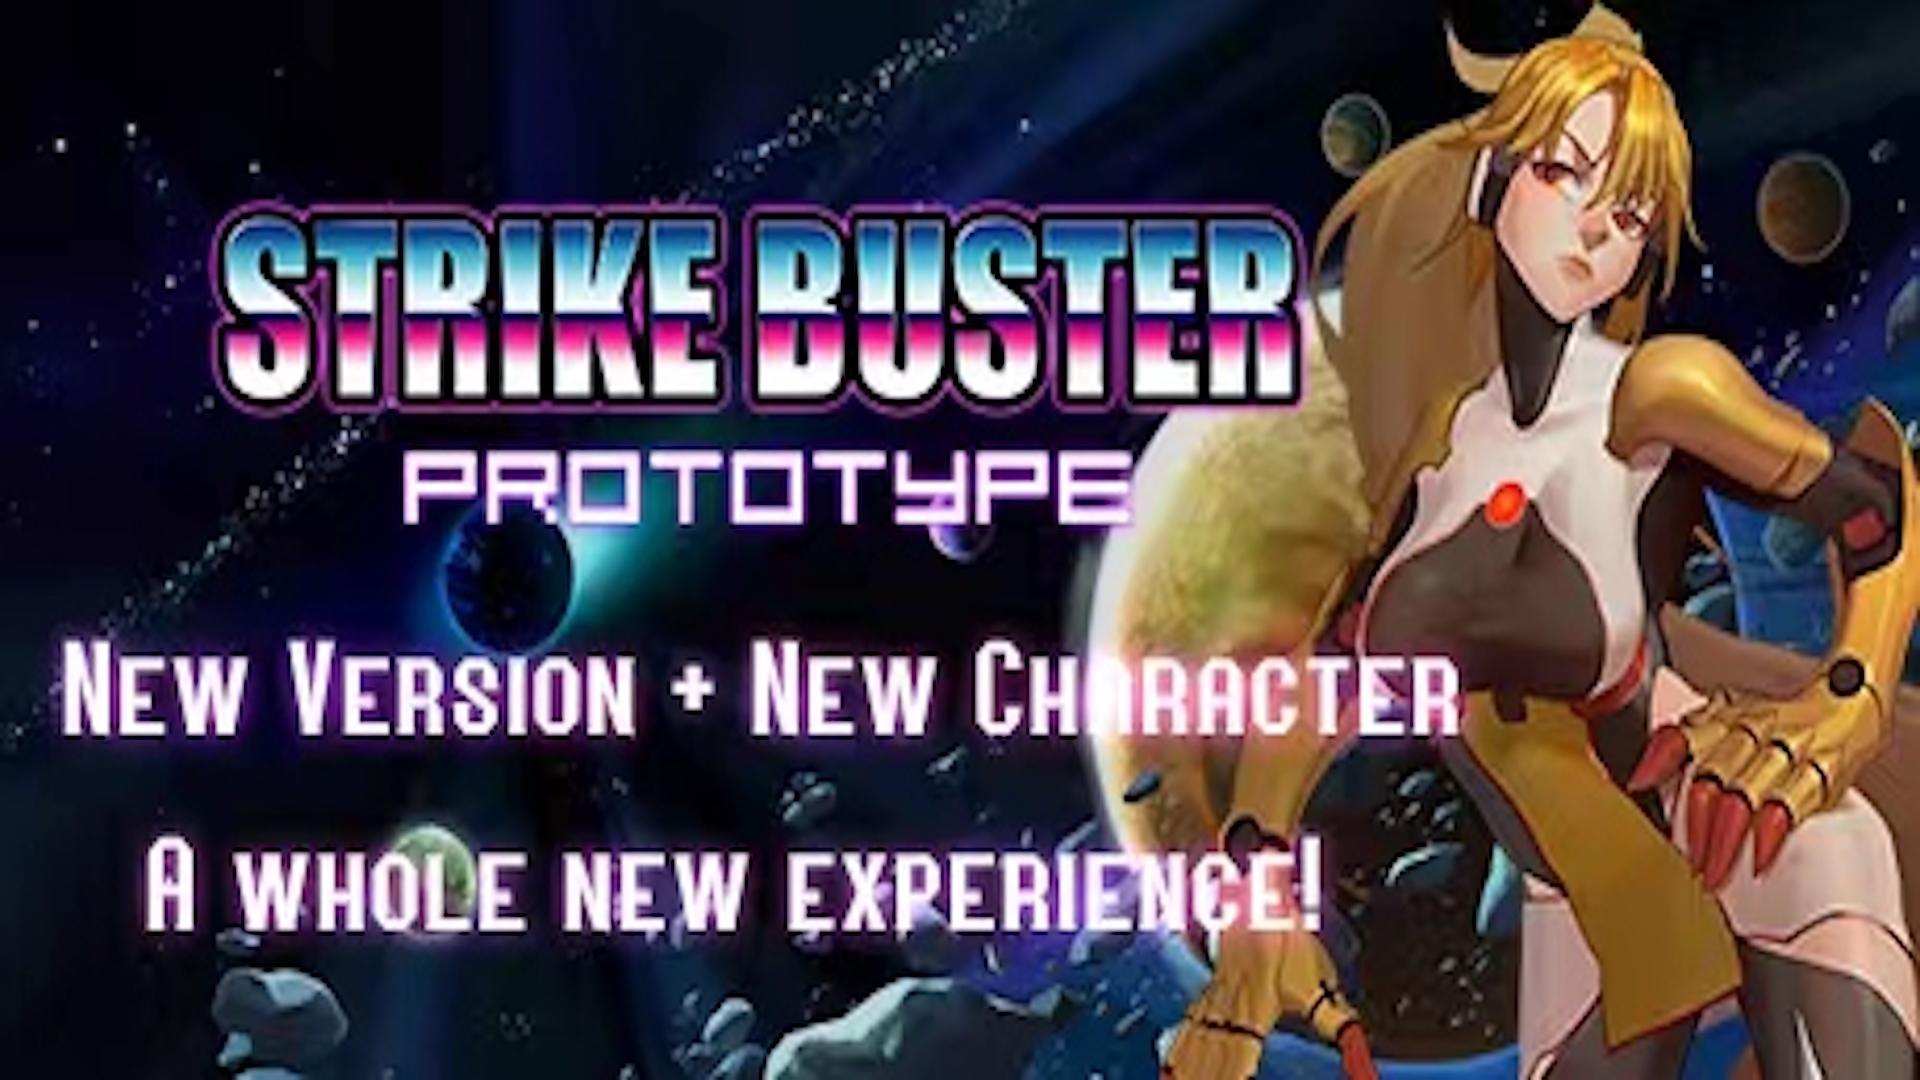 Banner of Prototype Strike Buster G1.0.2